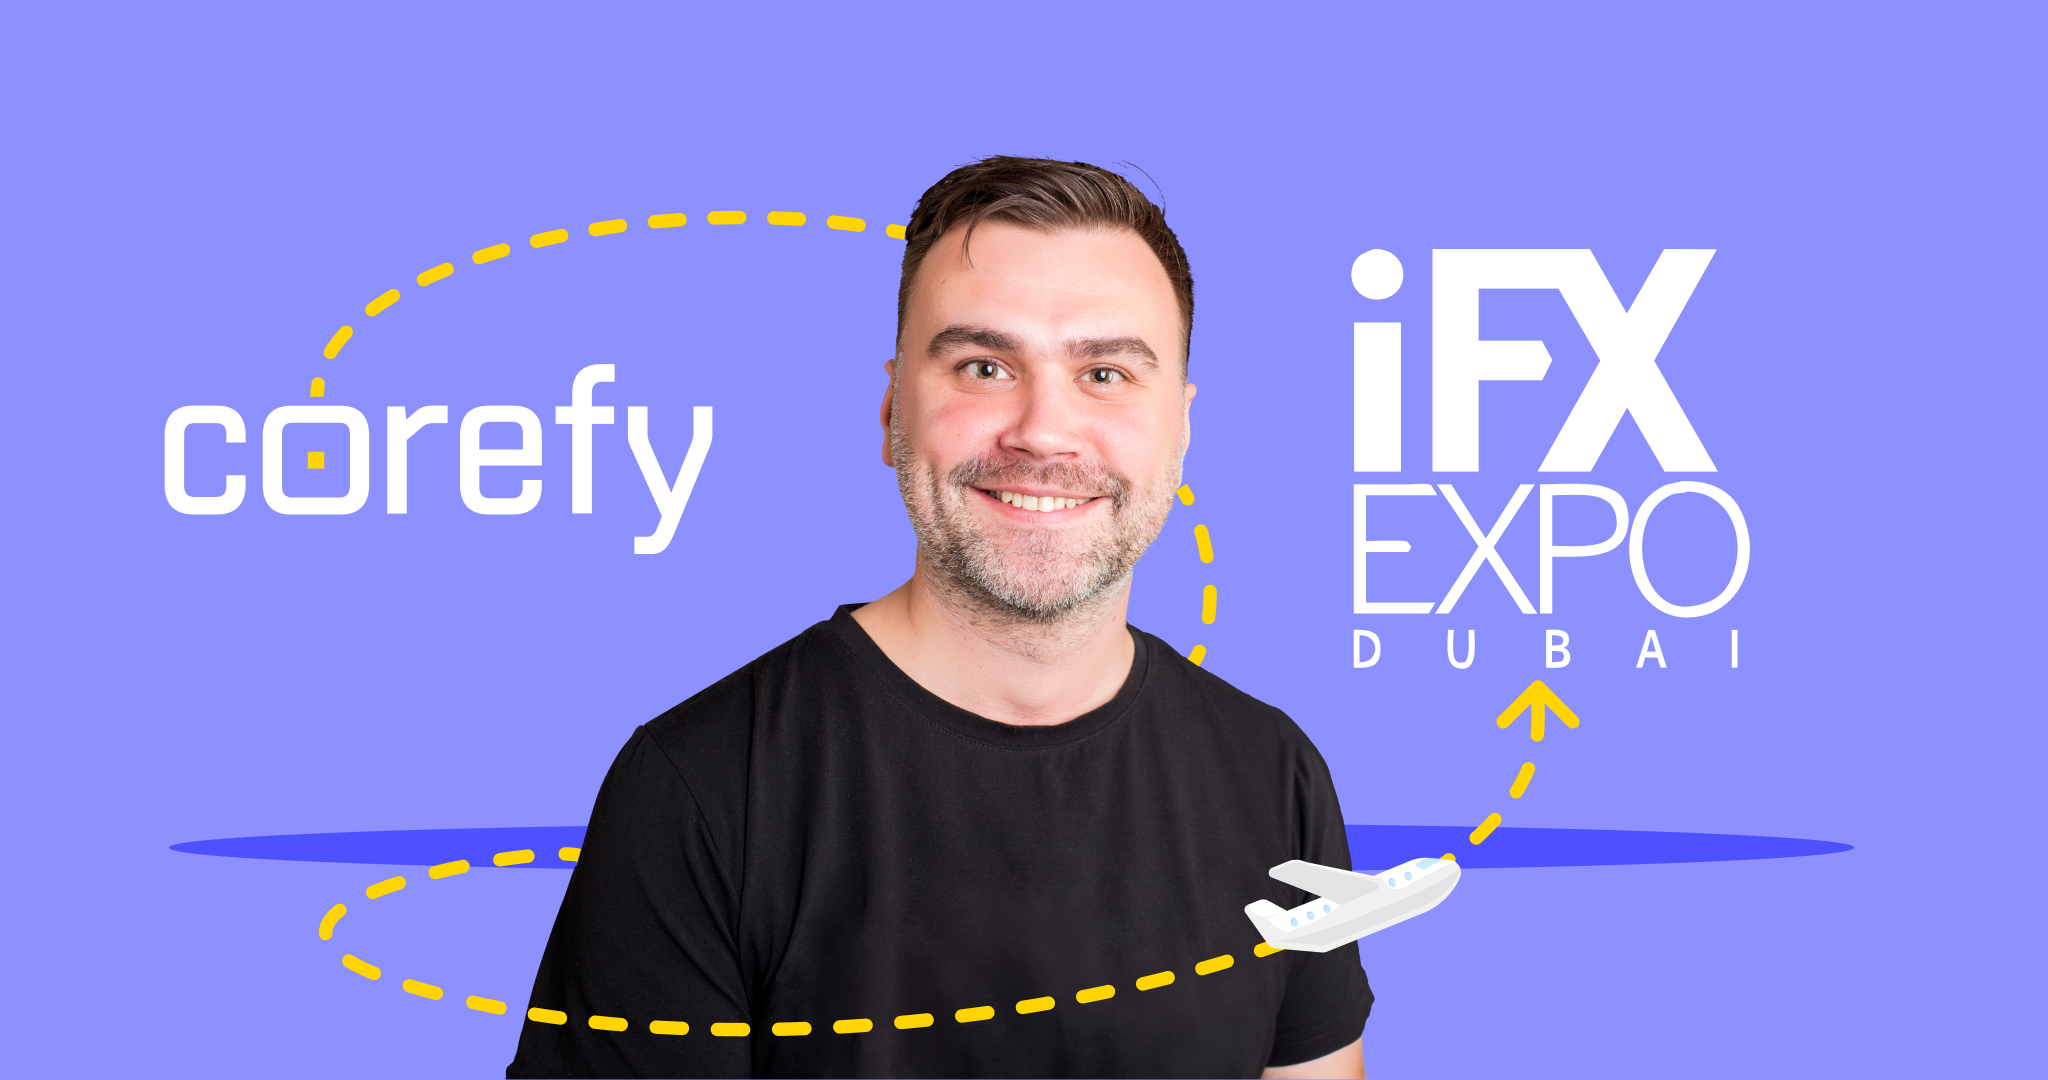 Corefy’s CBO speaking at iFX EXPO Dubai